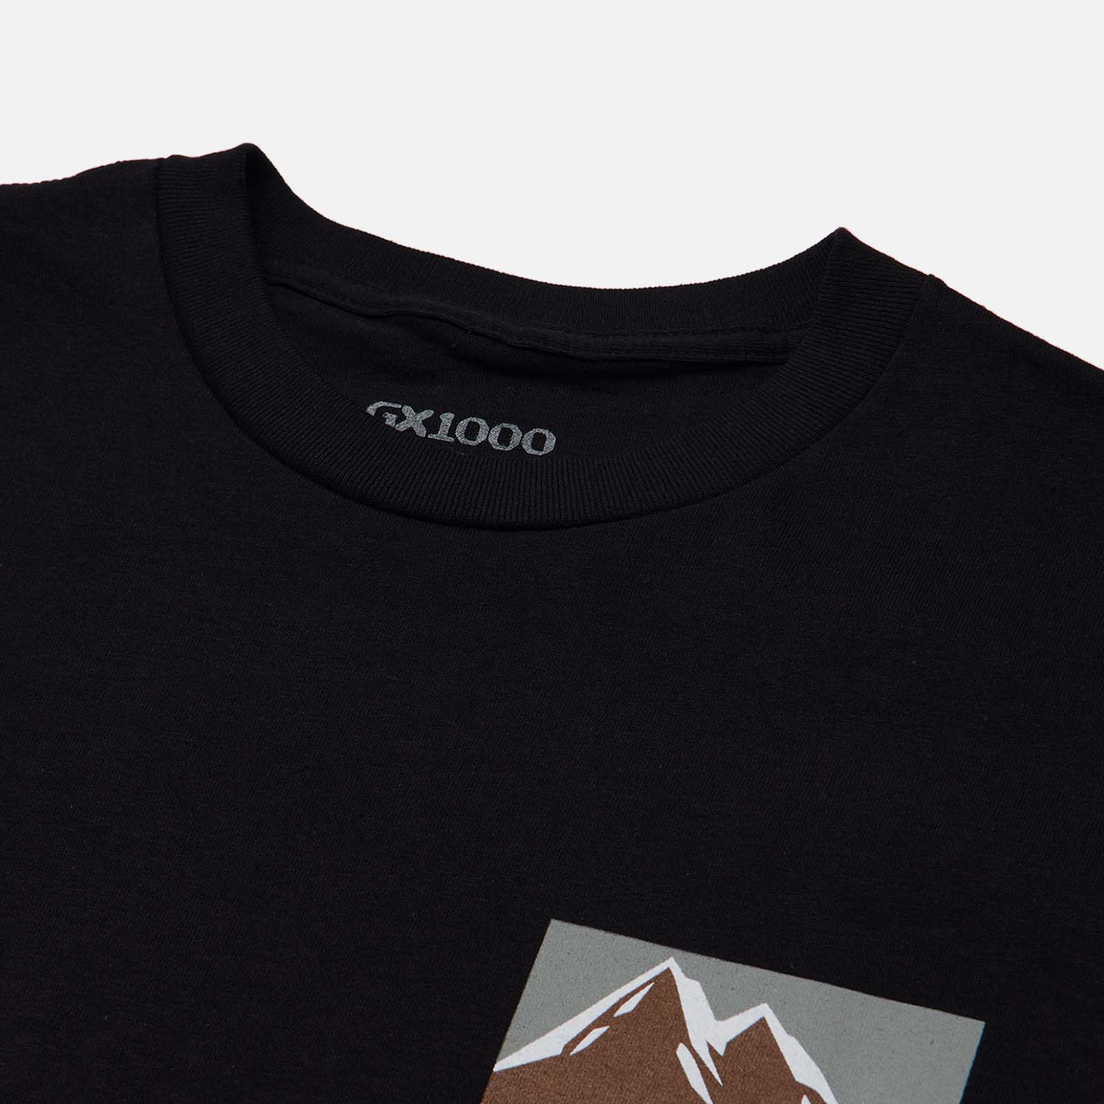 GX1000 Мужская футболка Twin Peaks